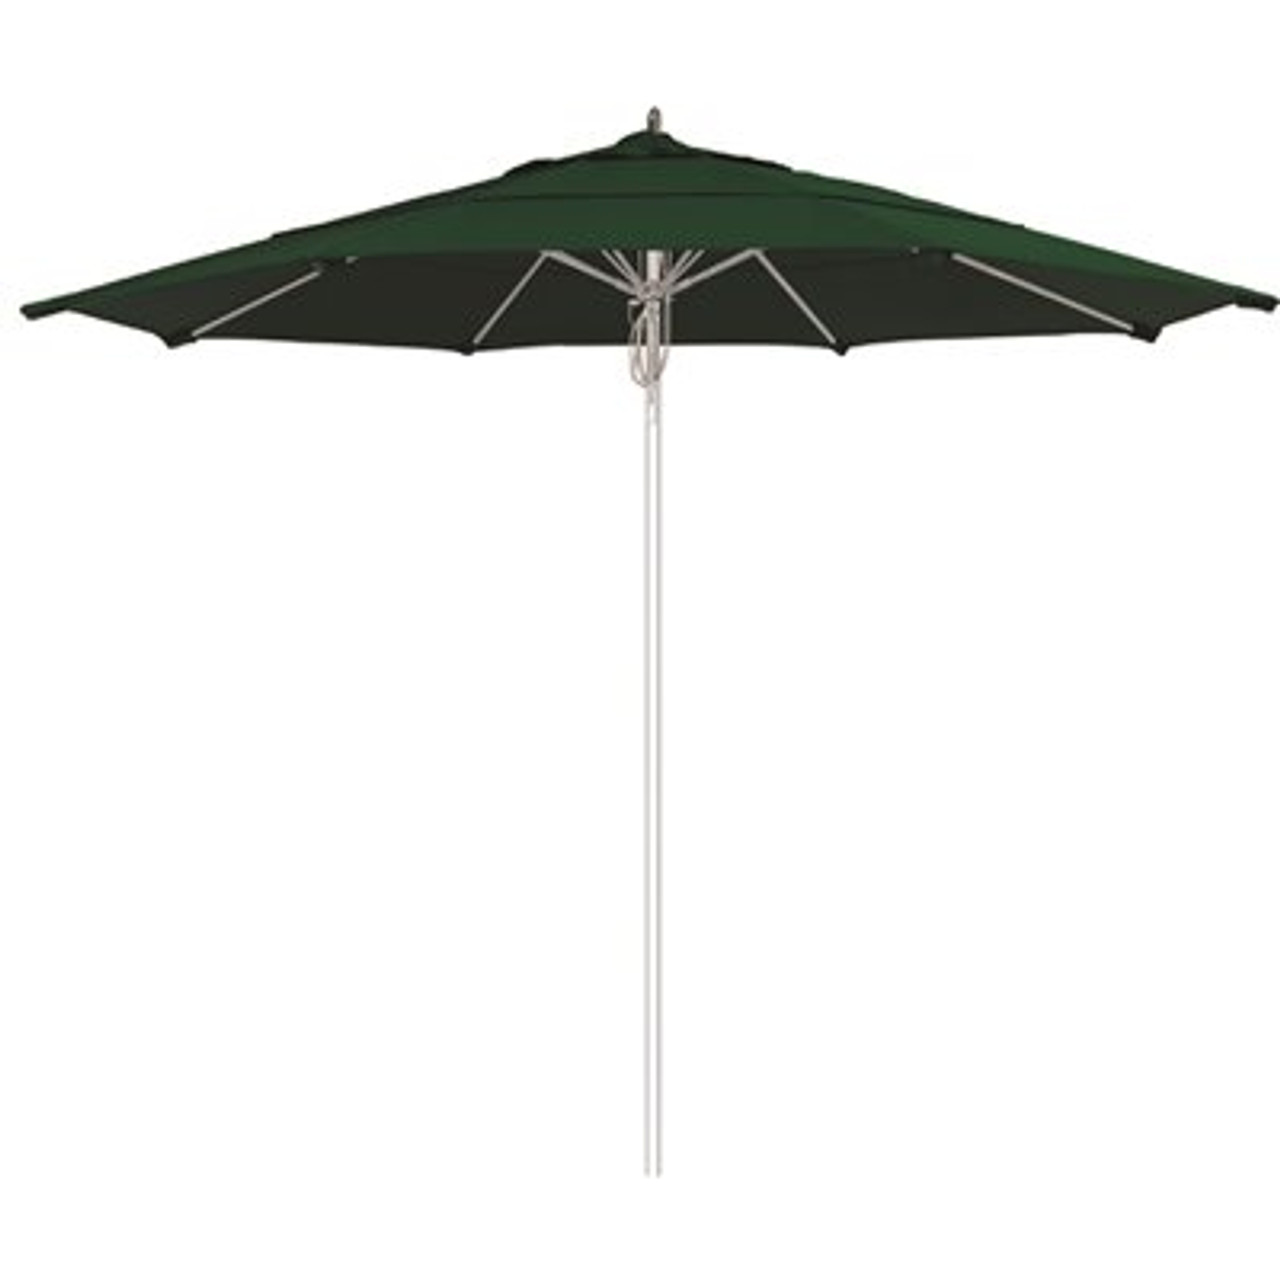 11 ft. Silver Aluminum Commercial Market Patio Umbrella Fiberglass Ribs and Pulley lift in Forest Green Sunbrella